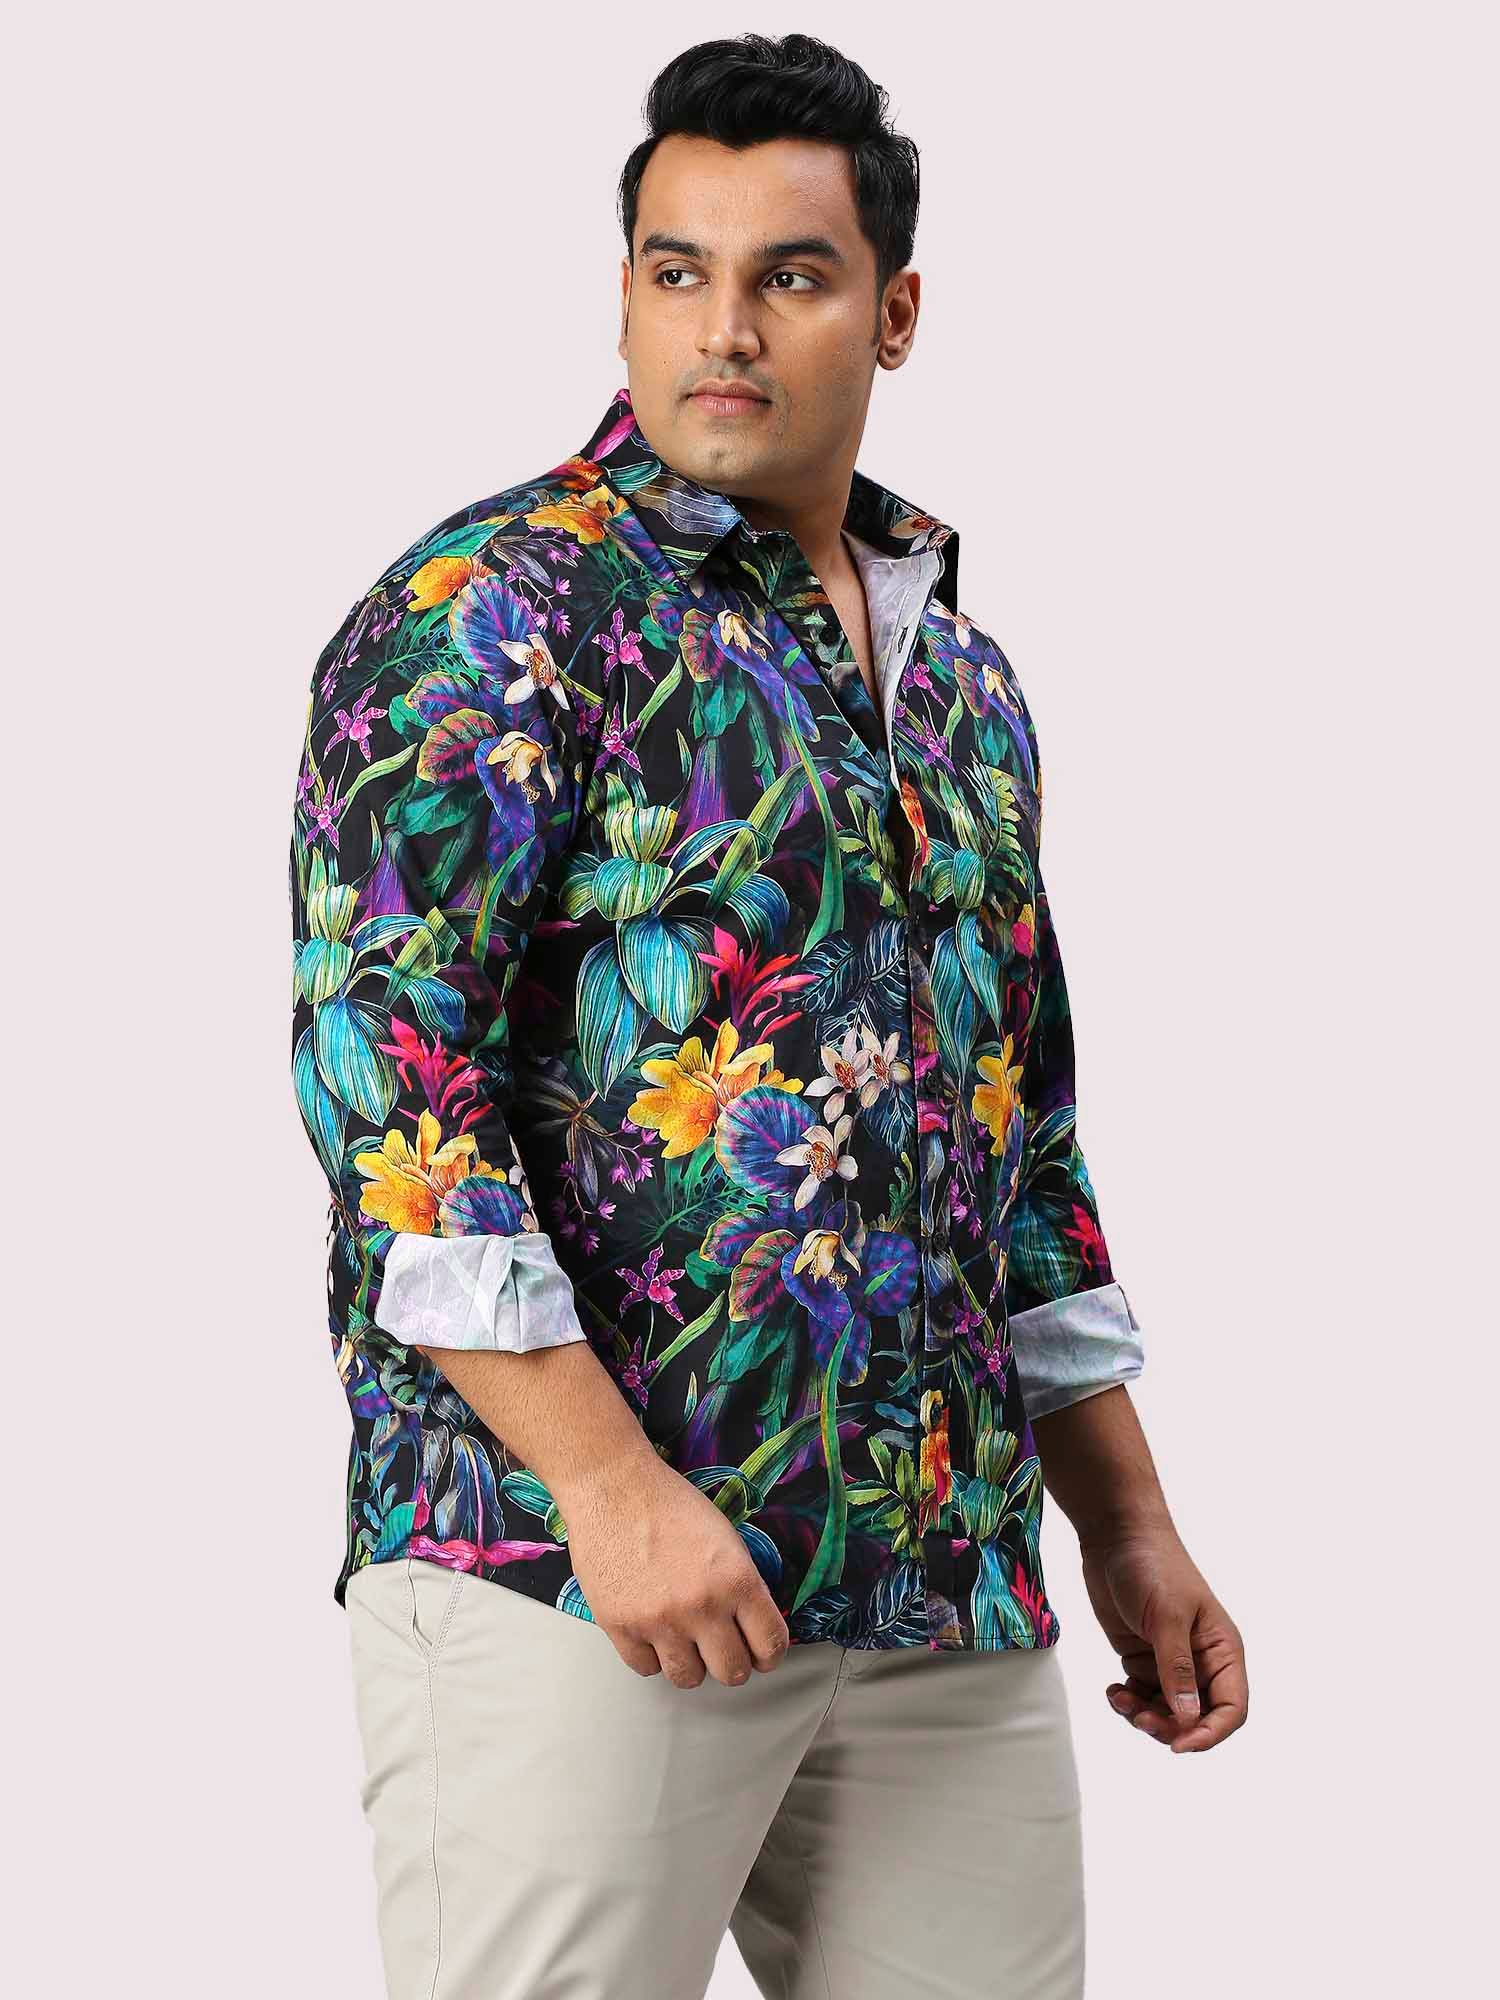 Posy Digital Printed Full Sleeve Shirt Men's Plus Size - Guniaa Fashions